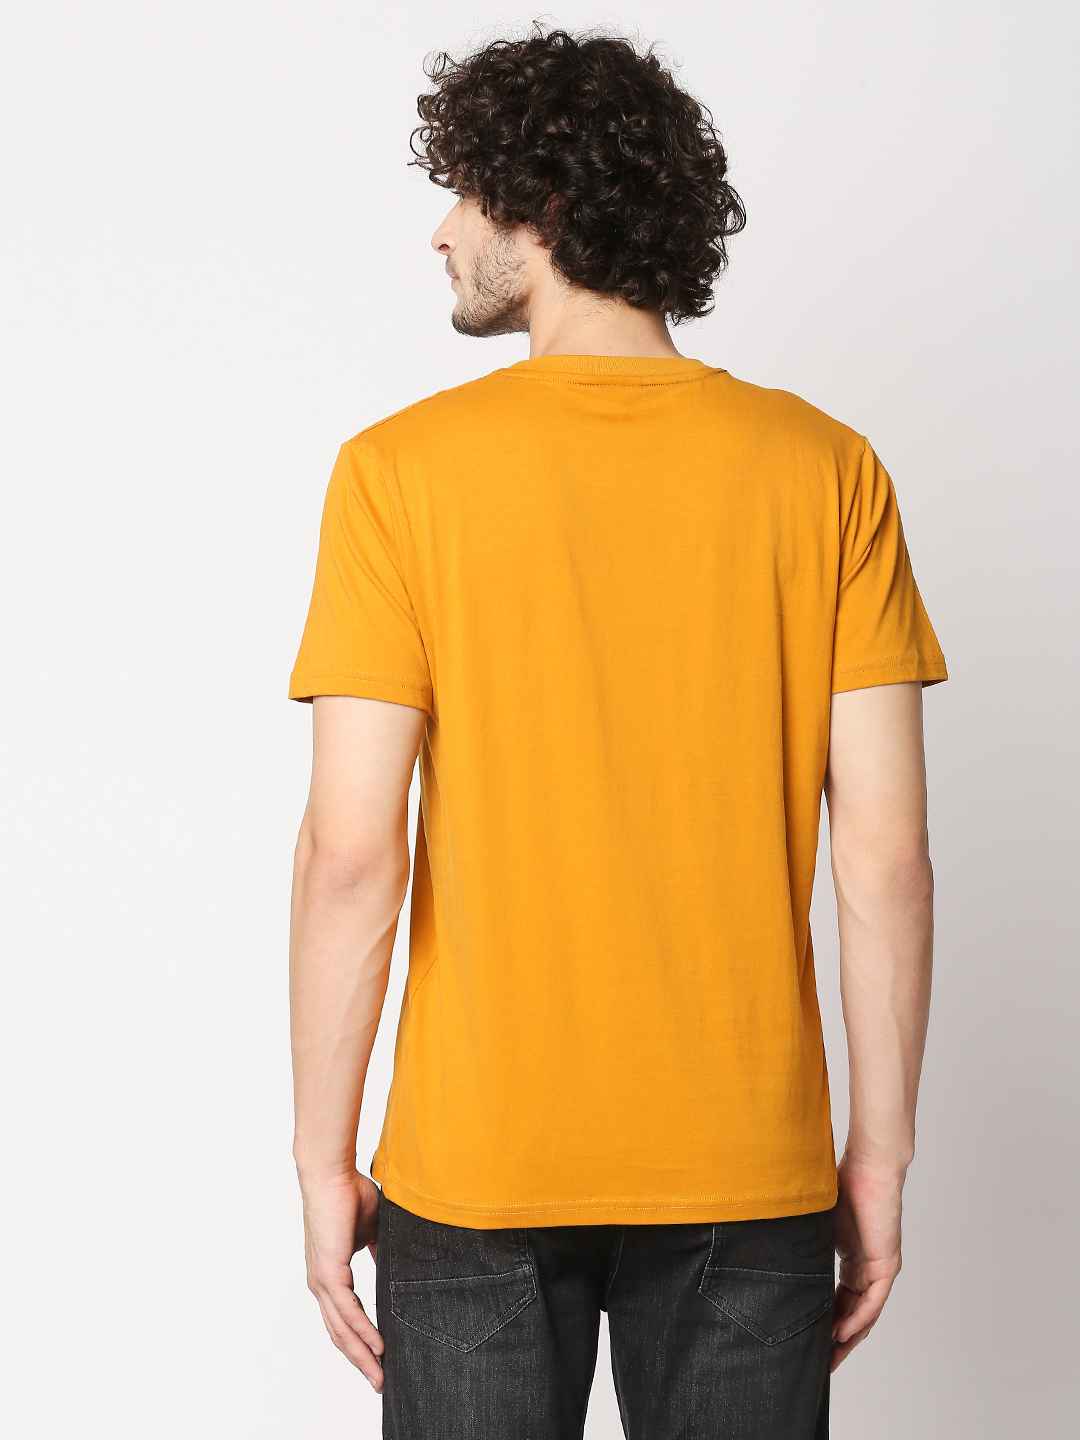 Buy Men's Comfort fit Mustard Yellow Chest print T-shirt